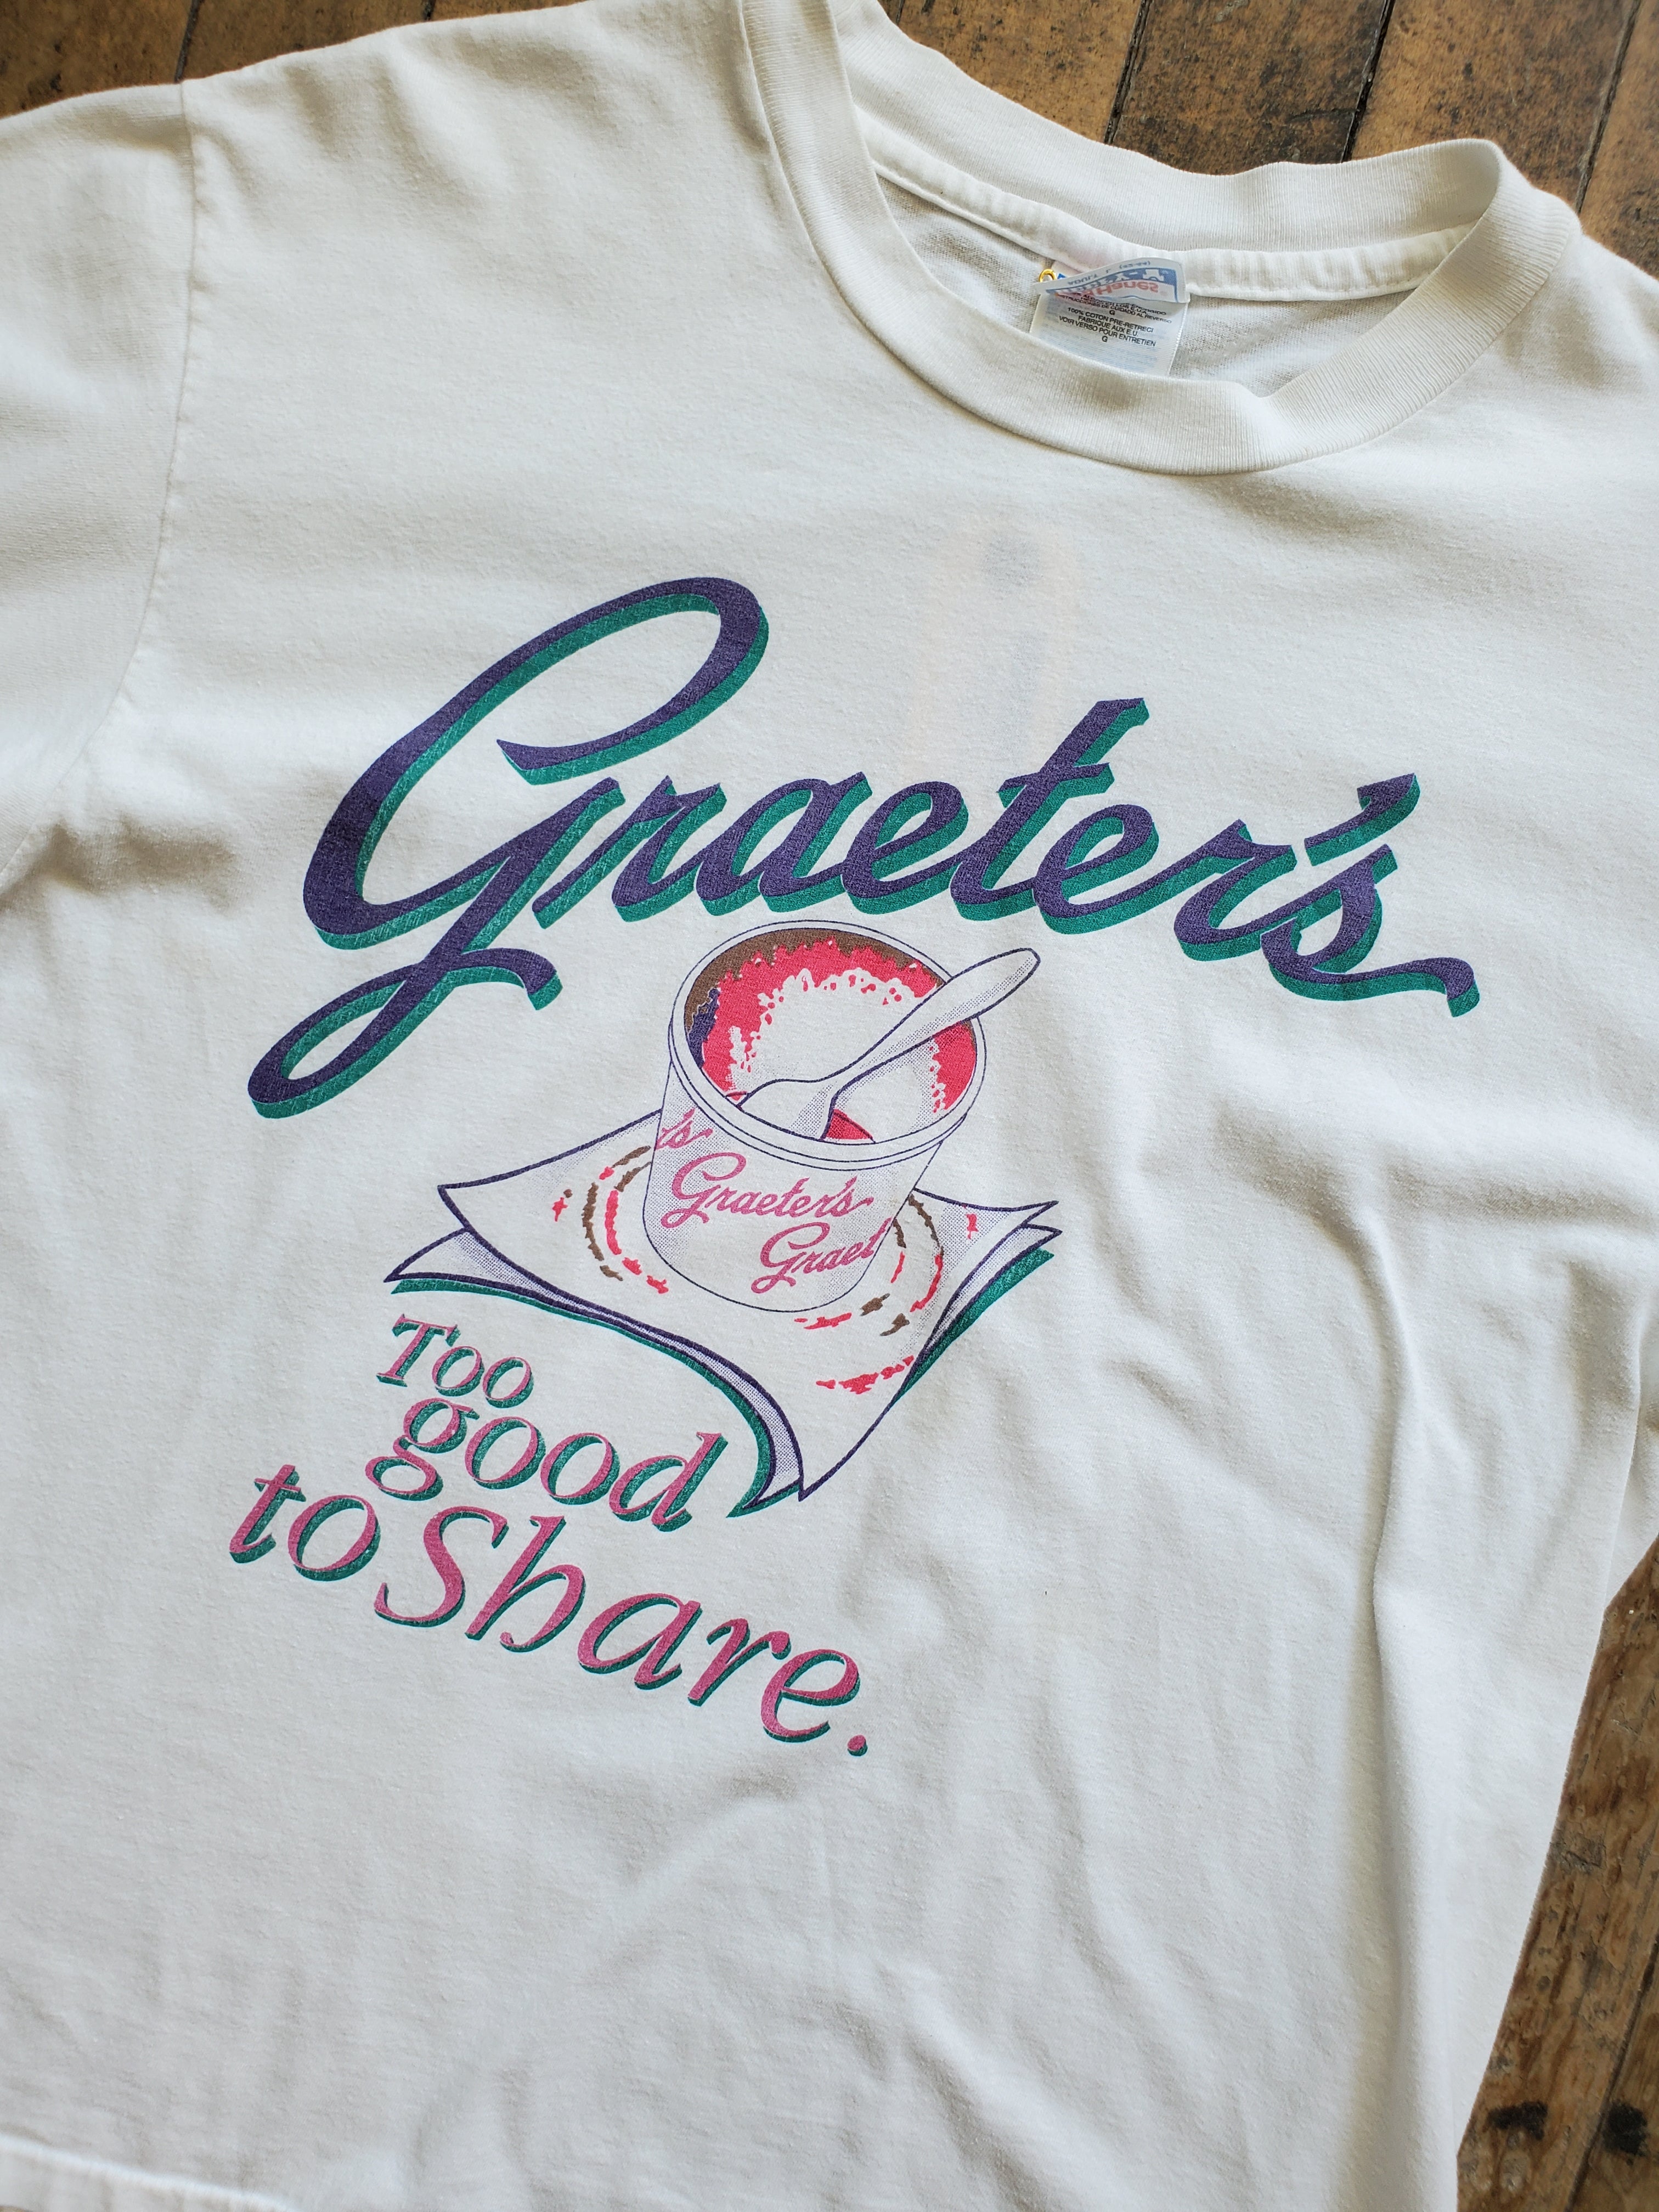 1990’s Graeter’s T Shirt